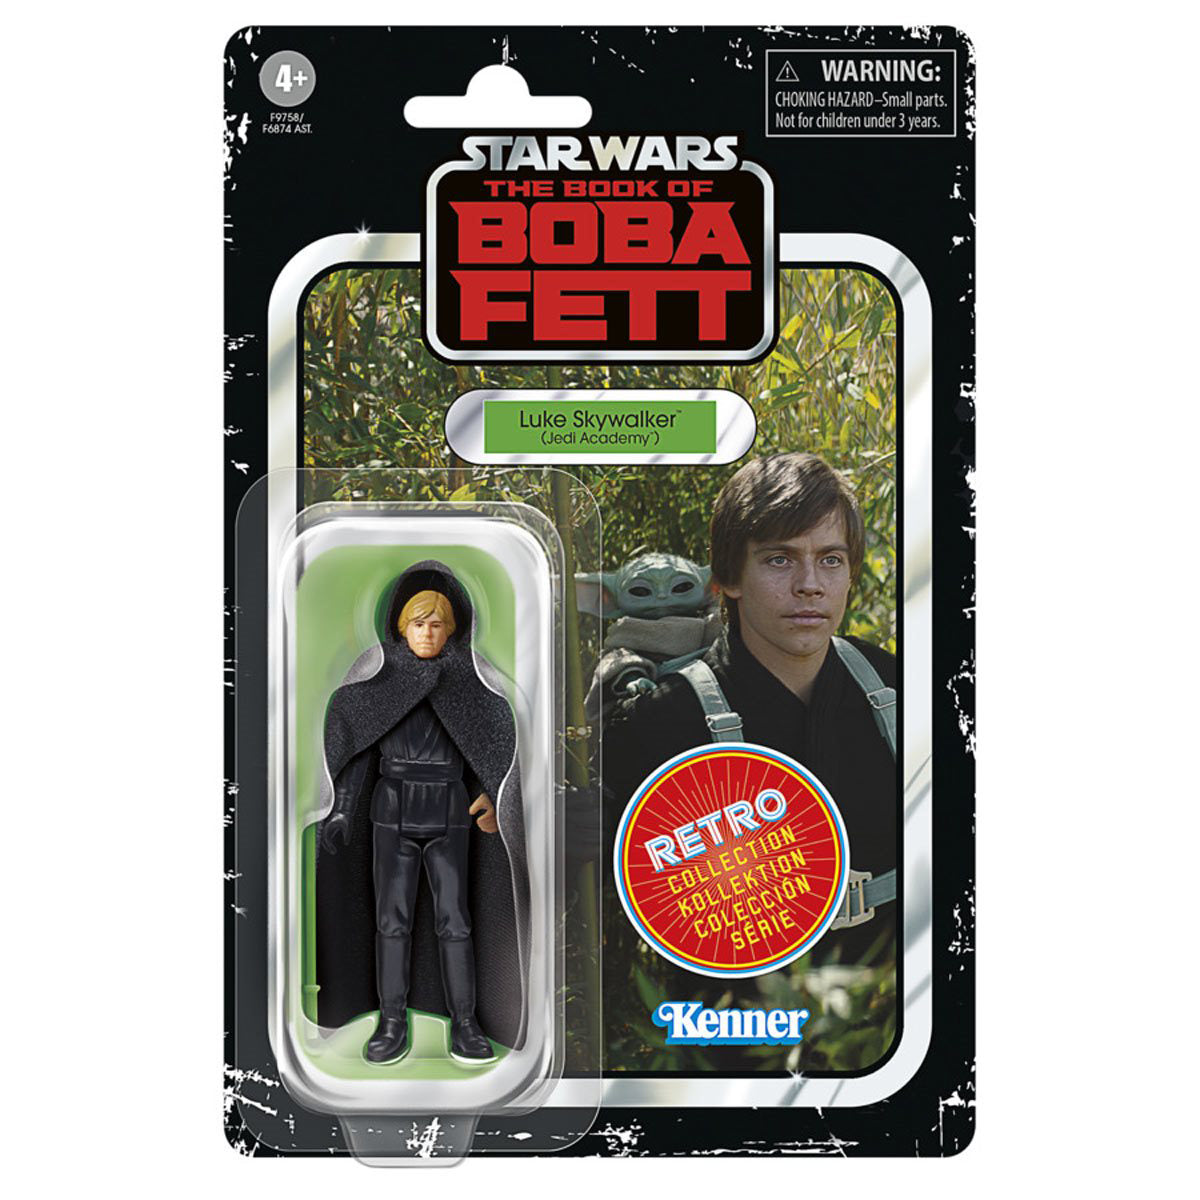 Star Wars The Book of Boba Fett Retro Collection Luke Skywalker Action Figure